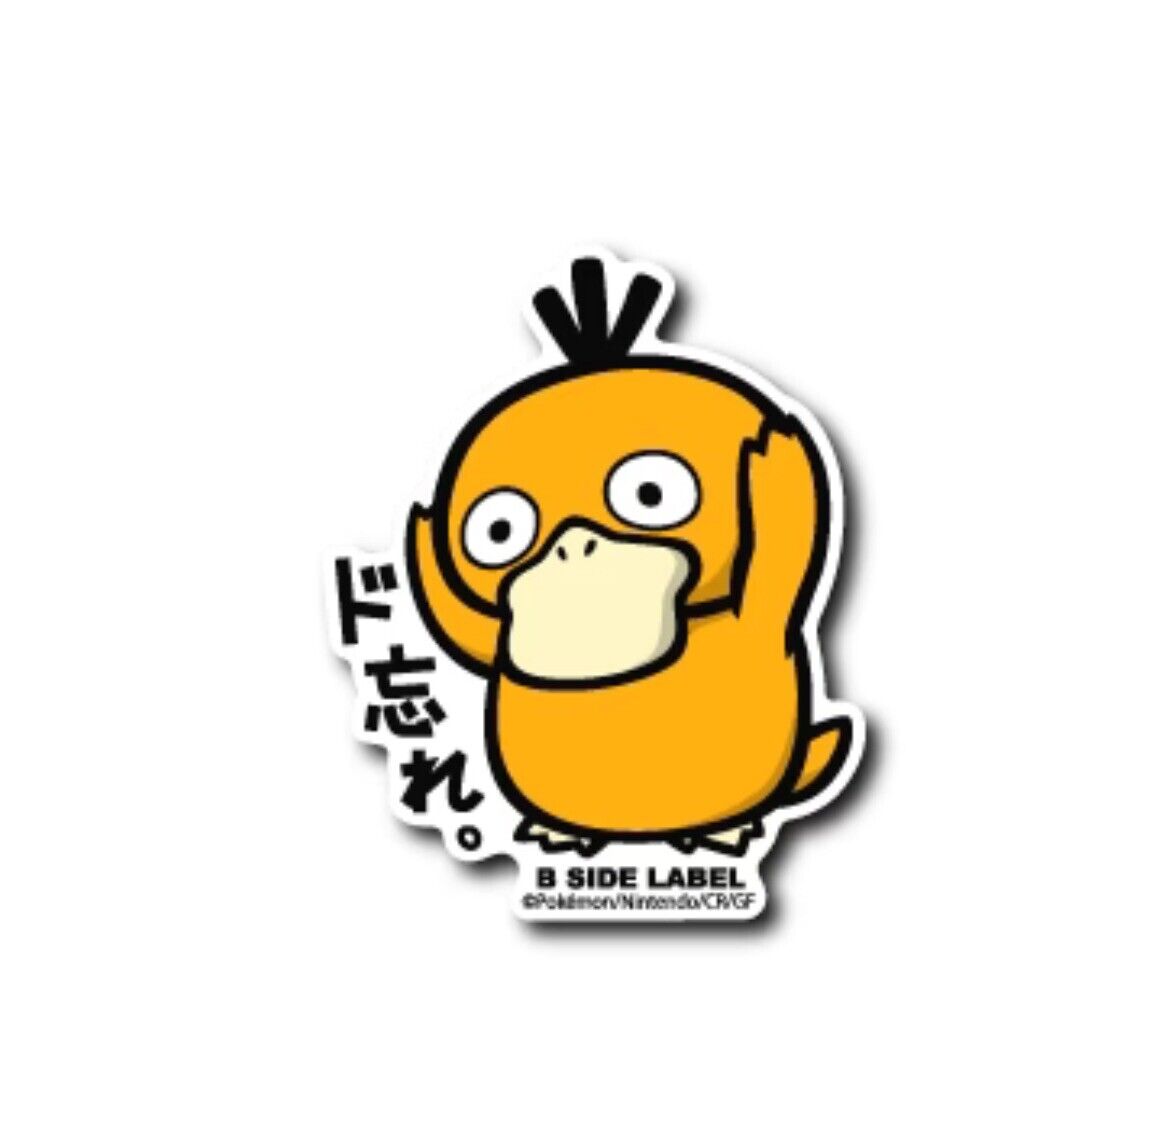 Pokemon |  Psyduck 0054  Sticker B SIDE LABEL Pokemon Center Japan